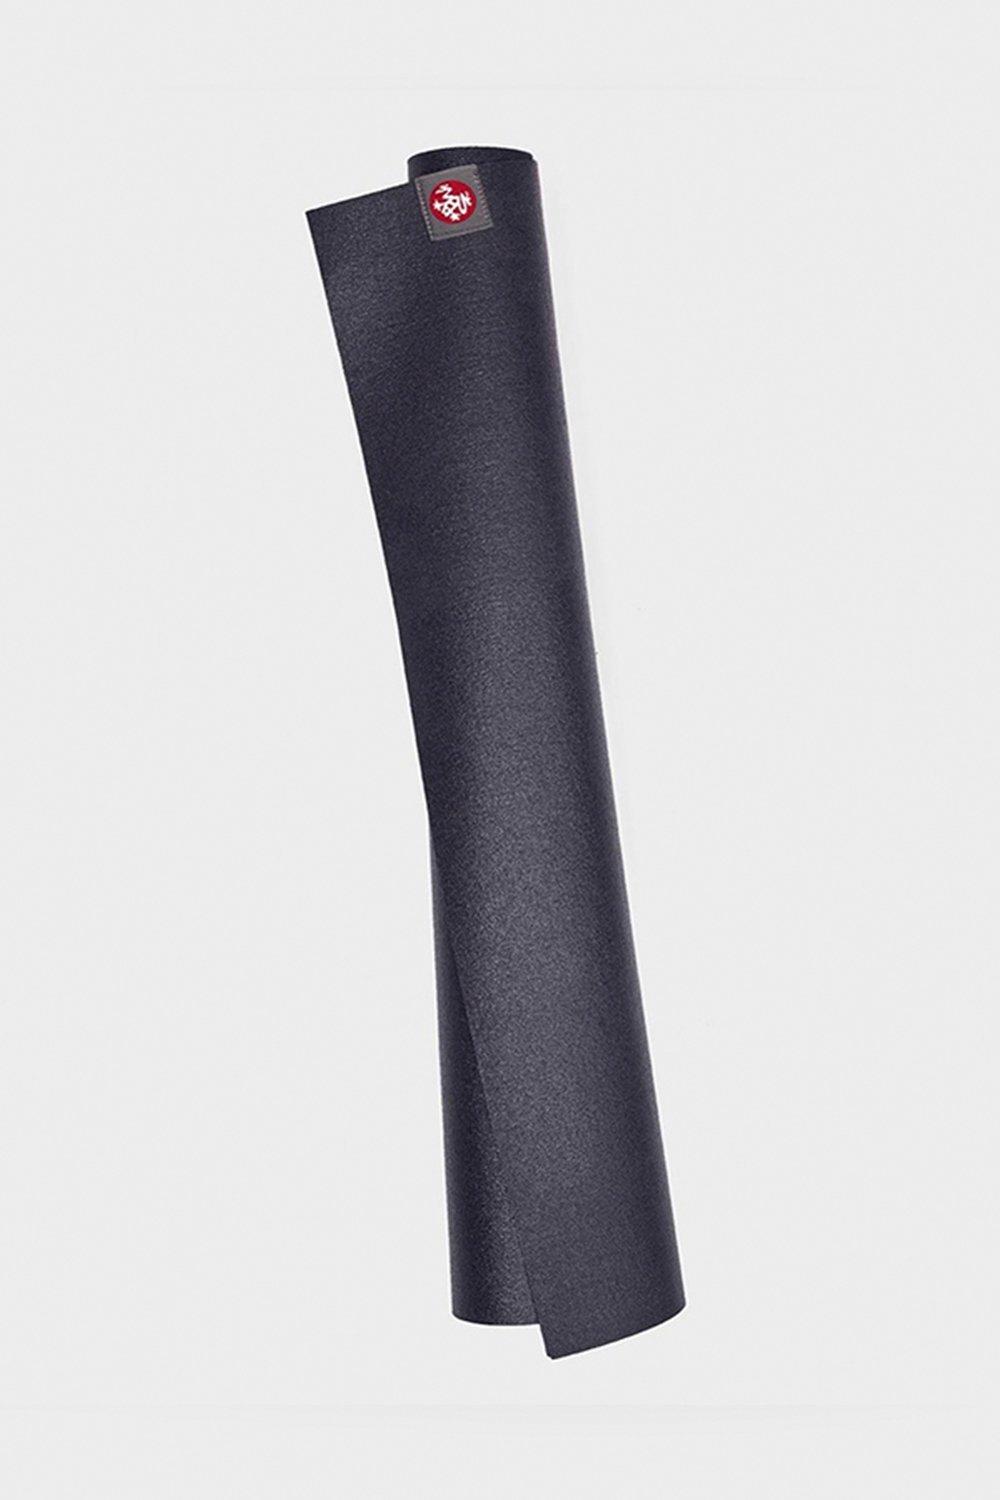 eKO SuperLite 79 Long Yoga Mat 2.5mm